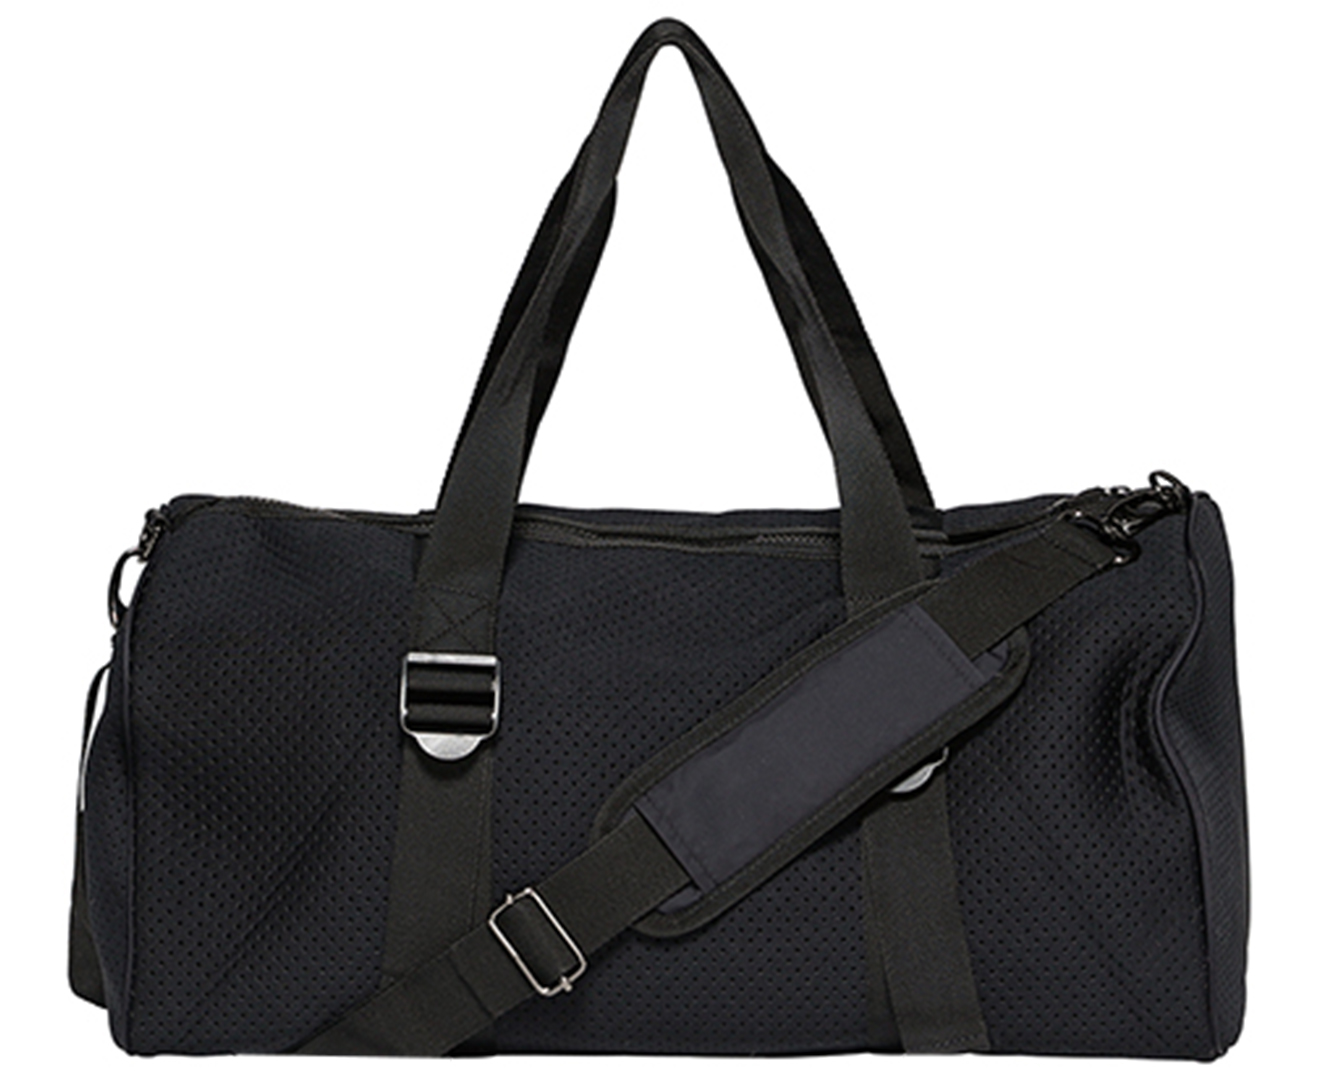 Lorna Jane Multi-Purpose Gym Bag - Black | Catch.com.au